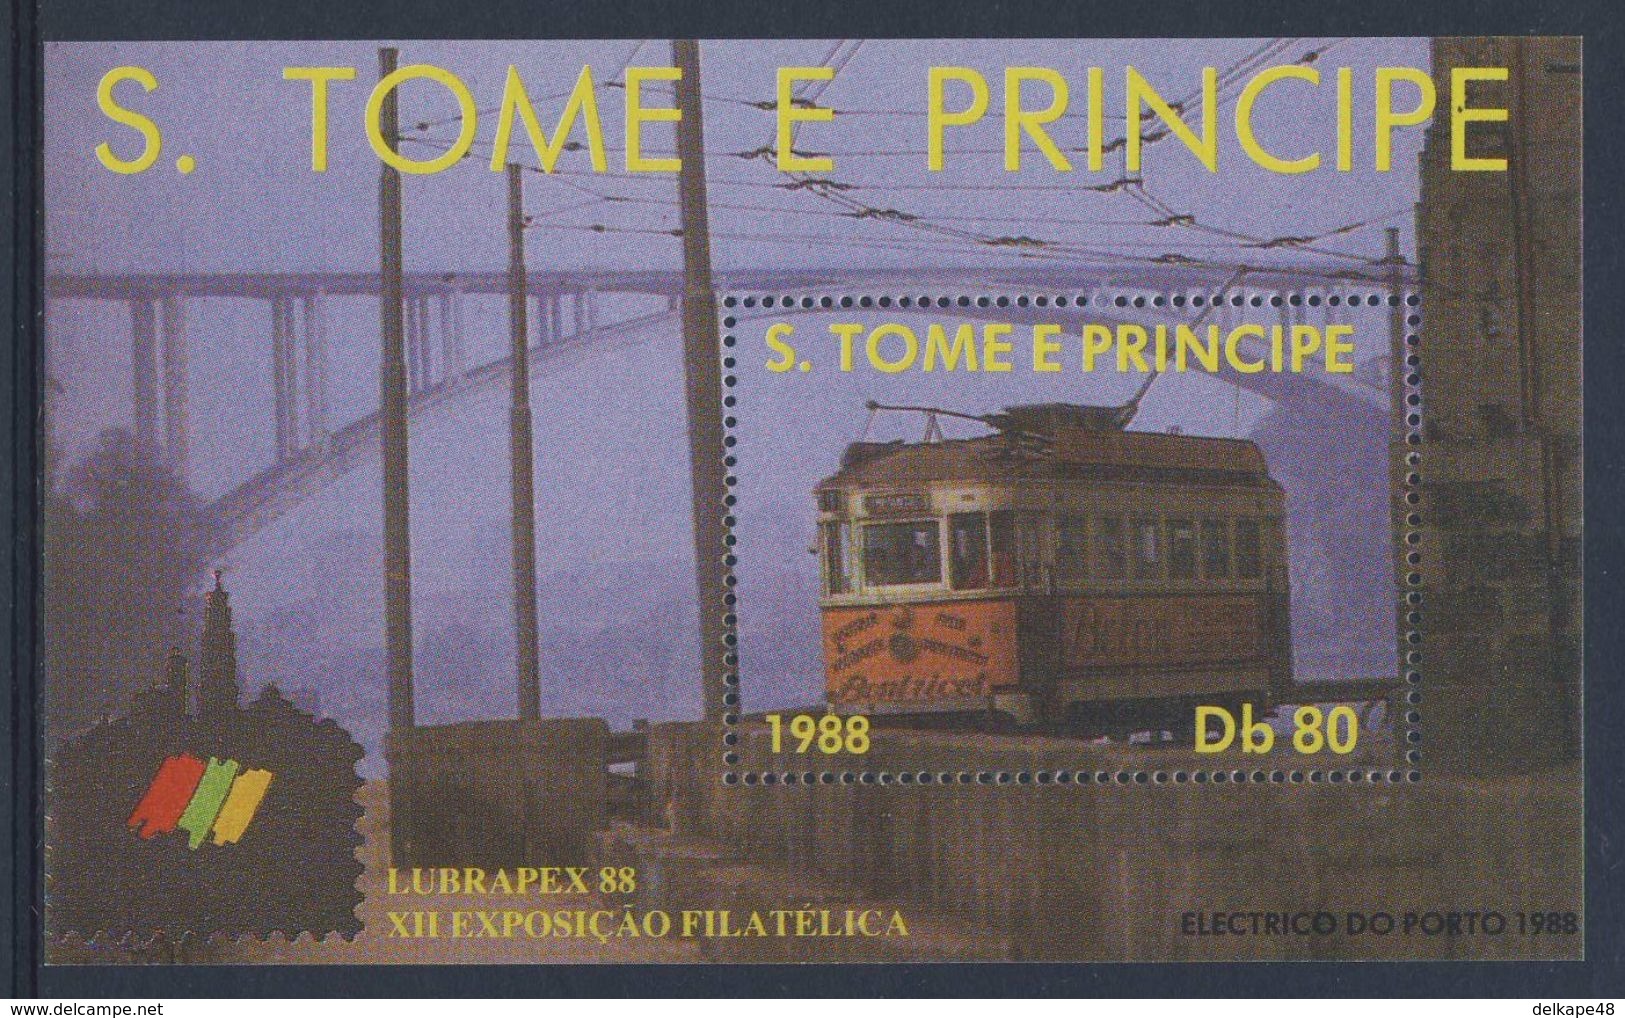 Sao Tomé E Principe 1988 B 177 - Mi 1042 ** Tram / Straßenbahn / Tramwat / Elétricos Do Porto - LUBRAPEX '88 - Tram